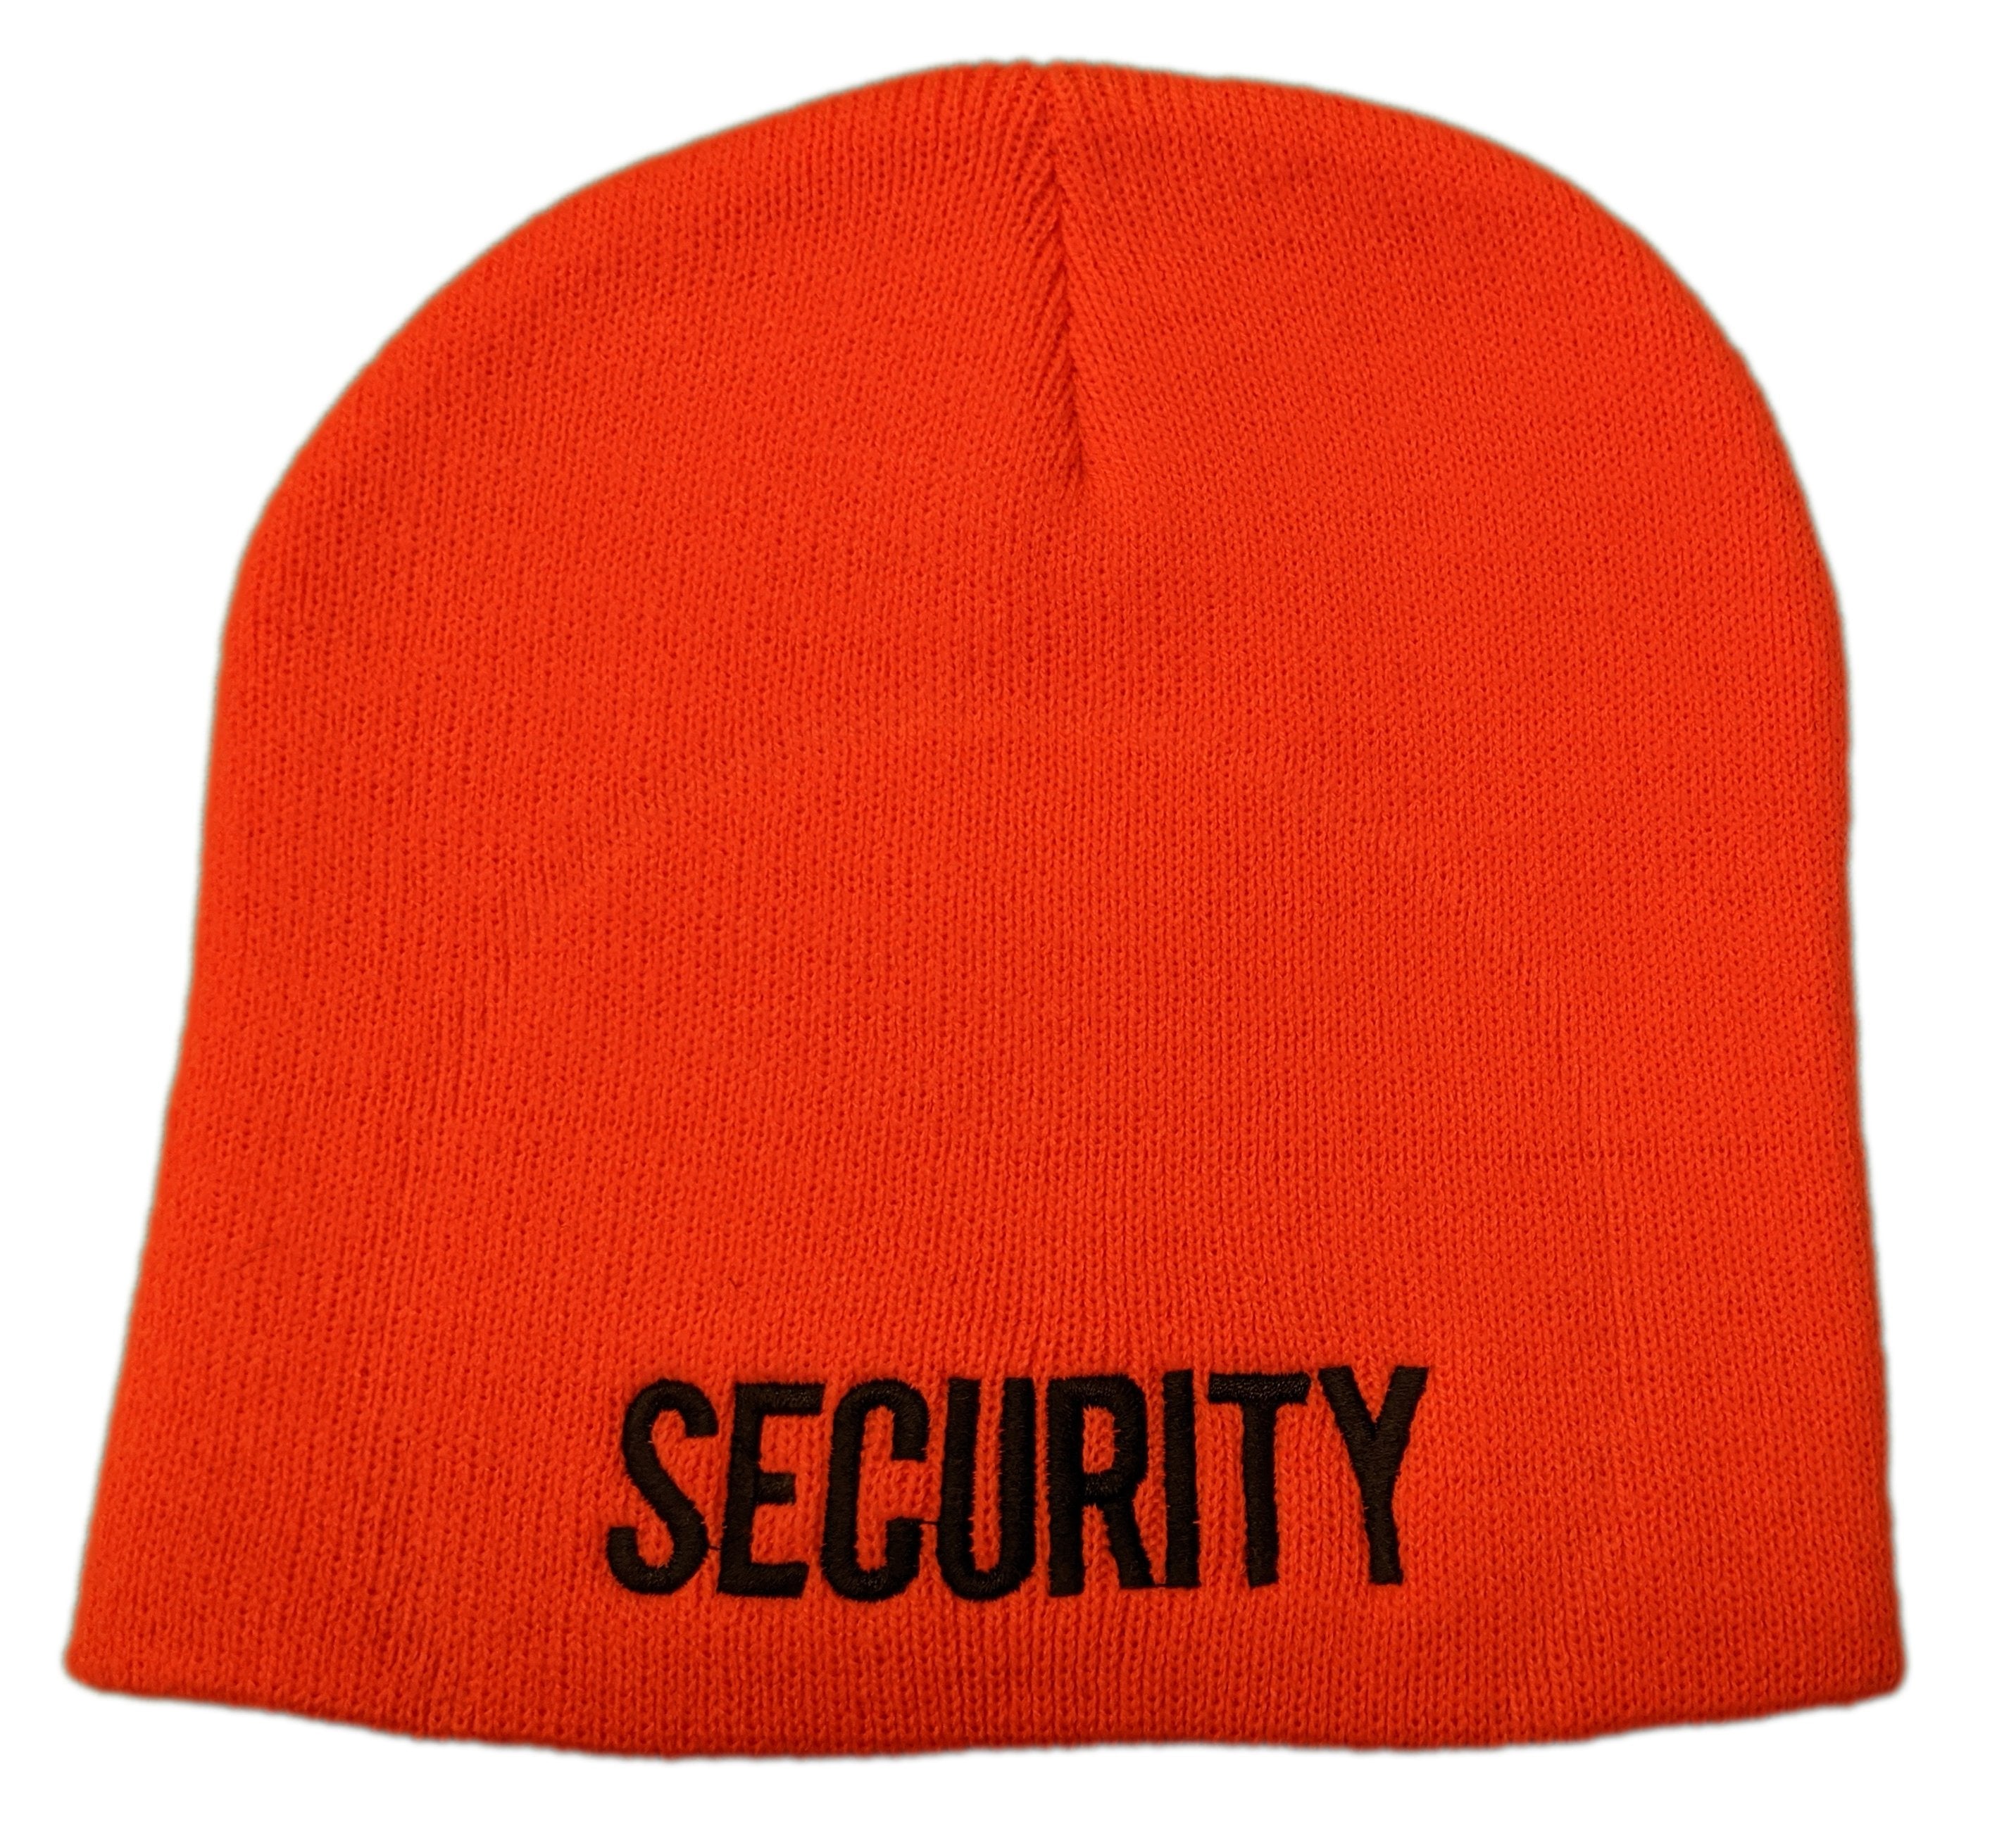 Men's Security Beanie (Orange / Black)